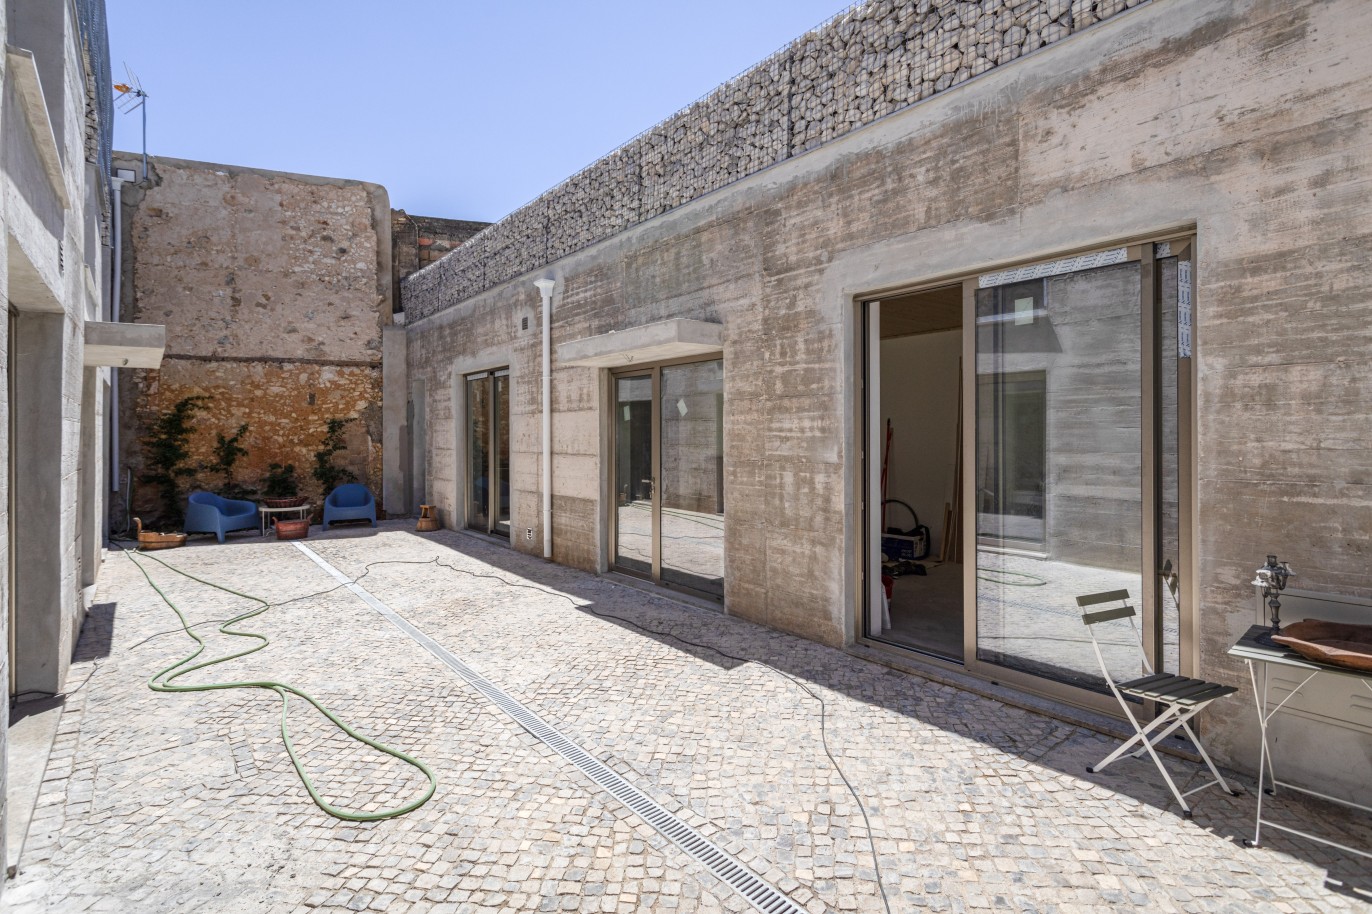 Propriedade renovada de 3 moradias, para venda no centro de Faro, Algarve_232954